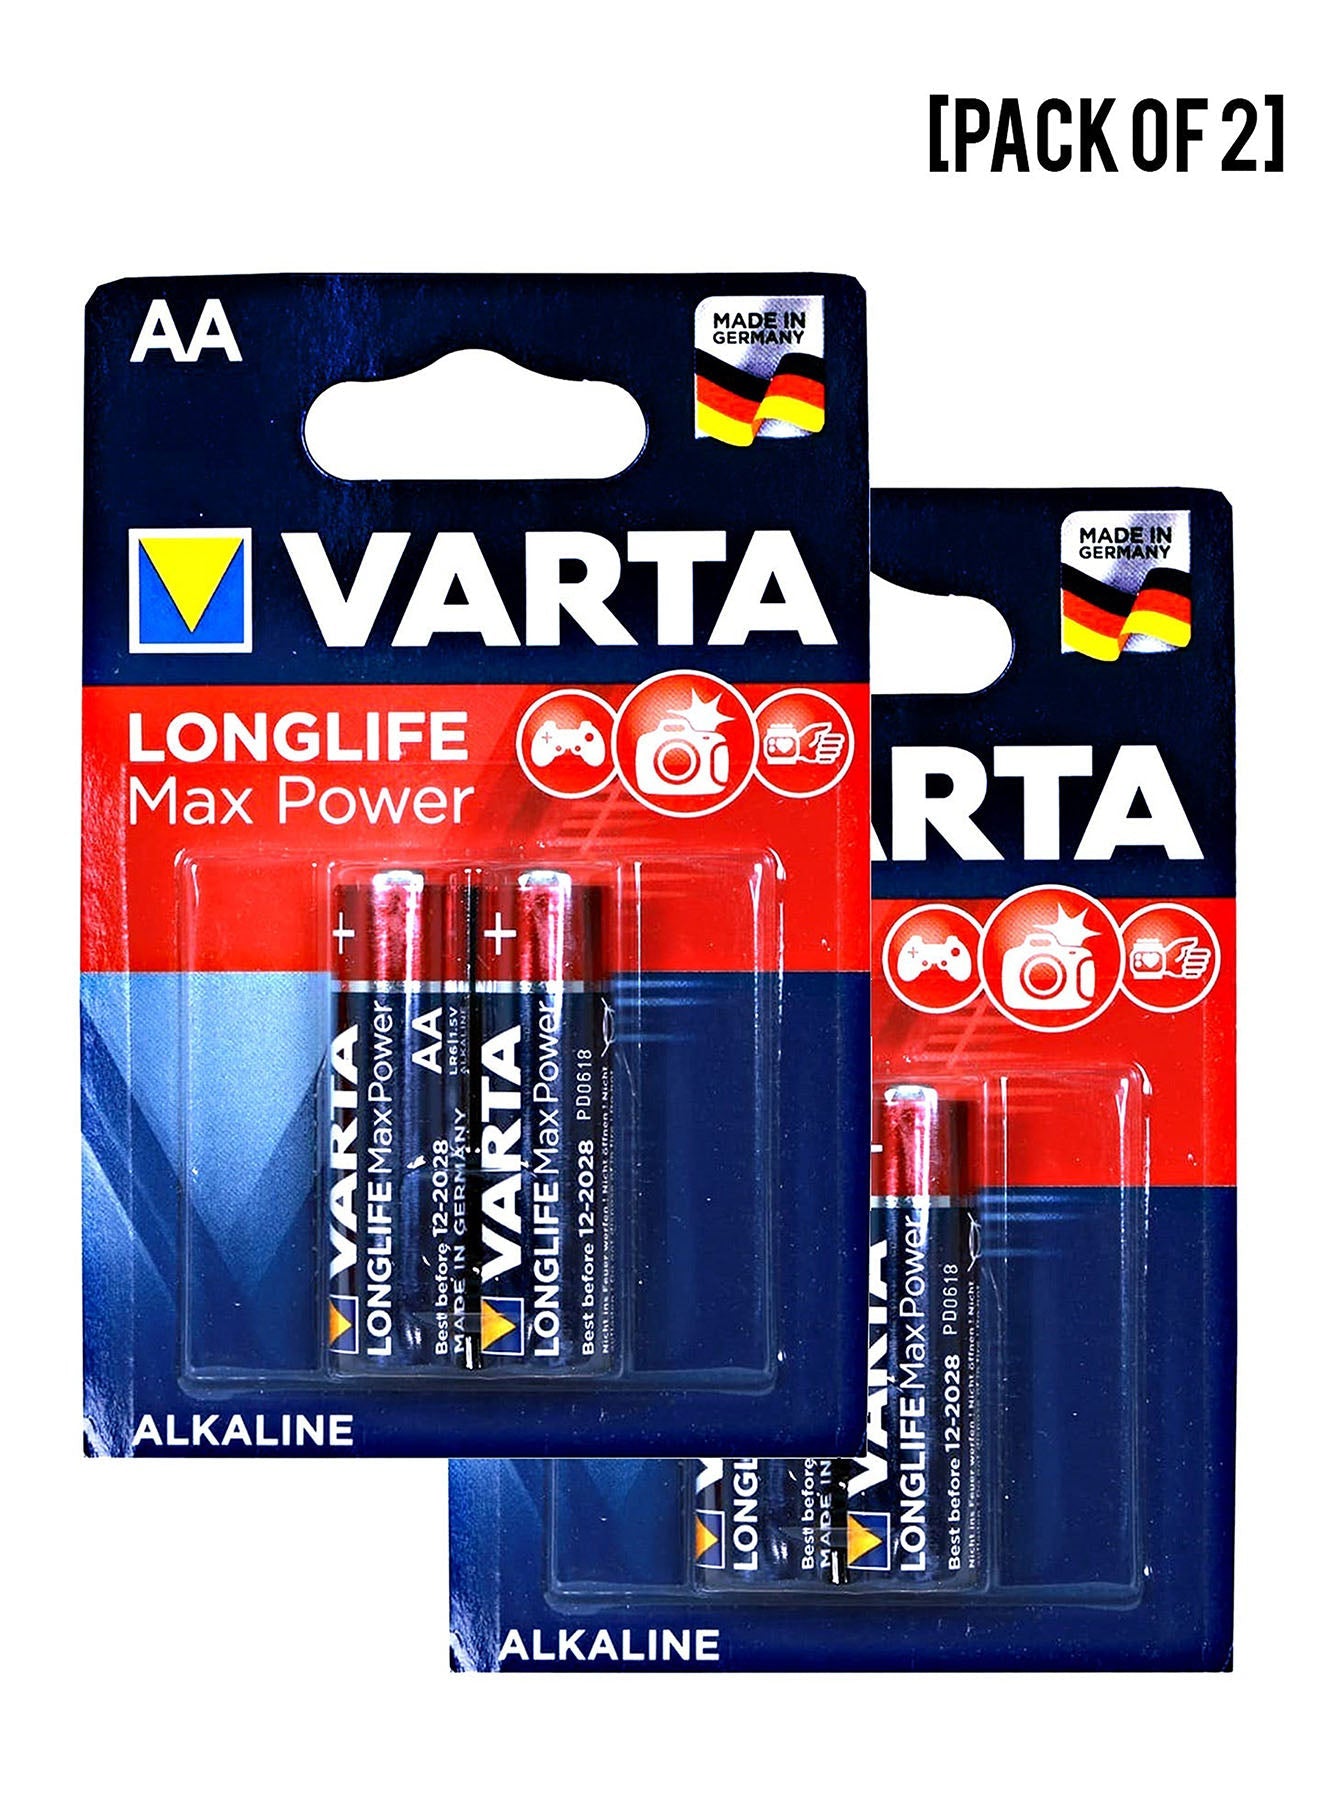 Varta Long Life Max Power AA Batteries 2 Units Value Pack of 2 